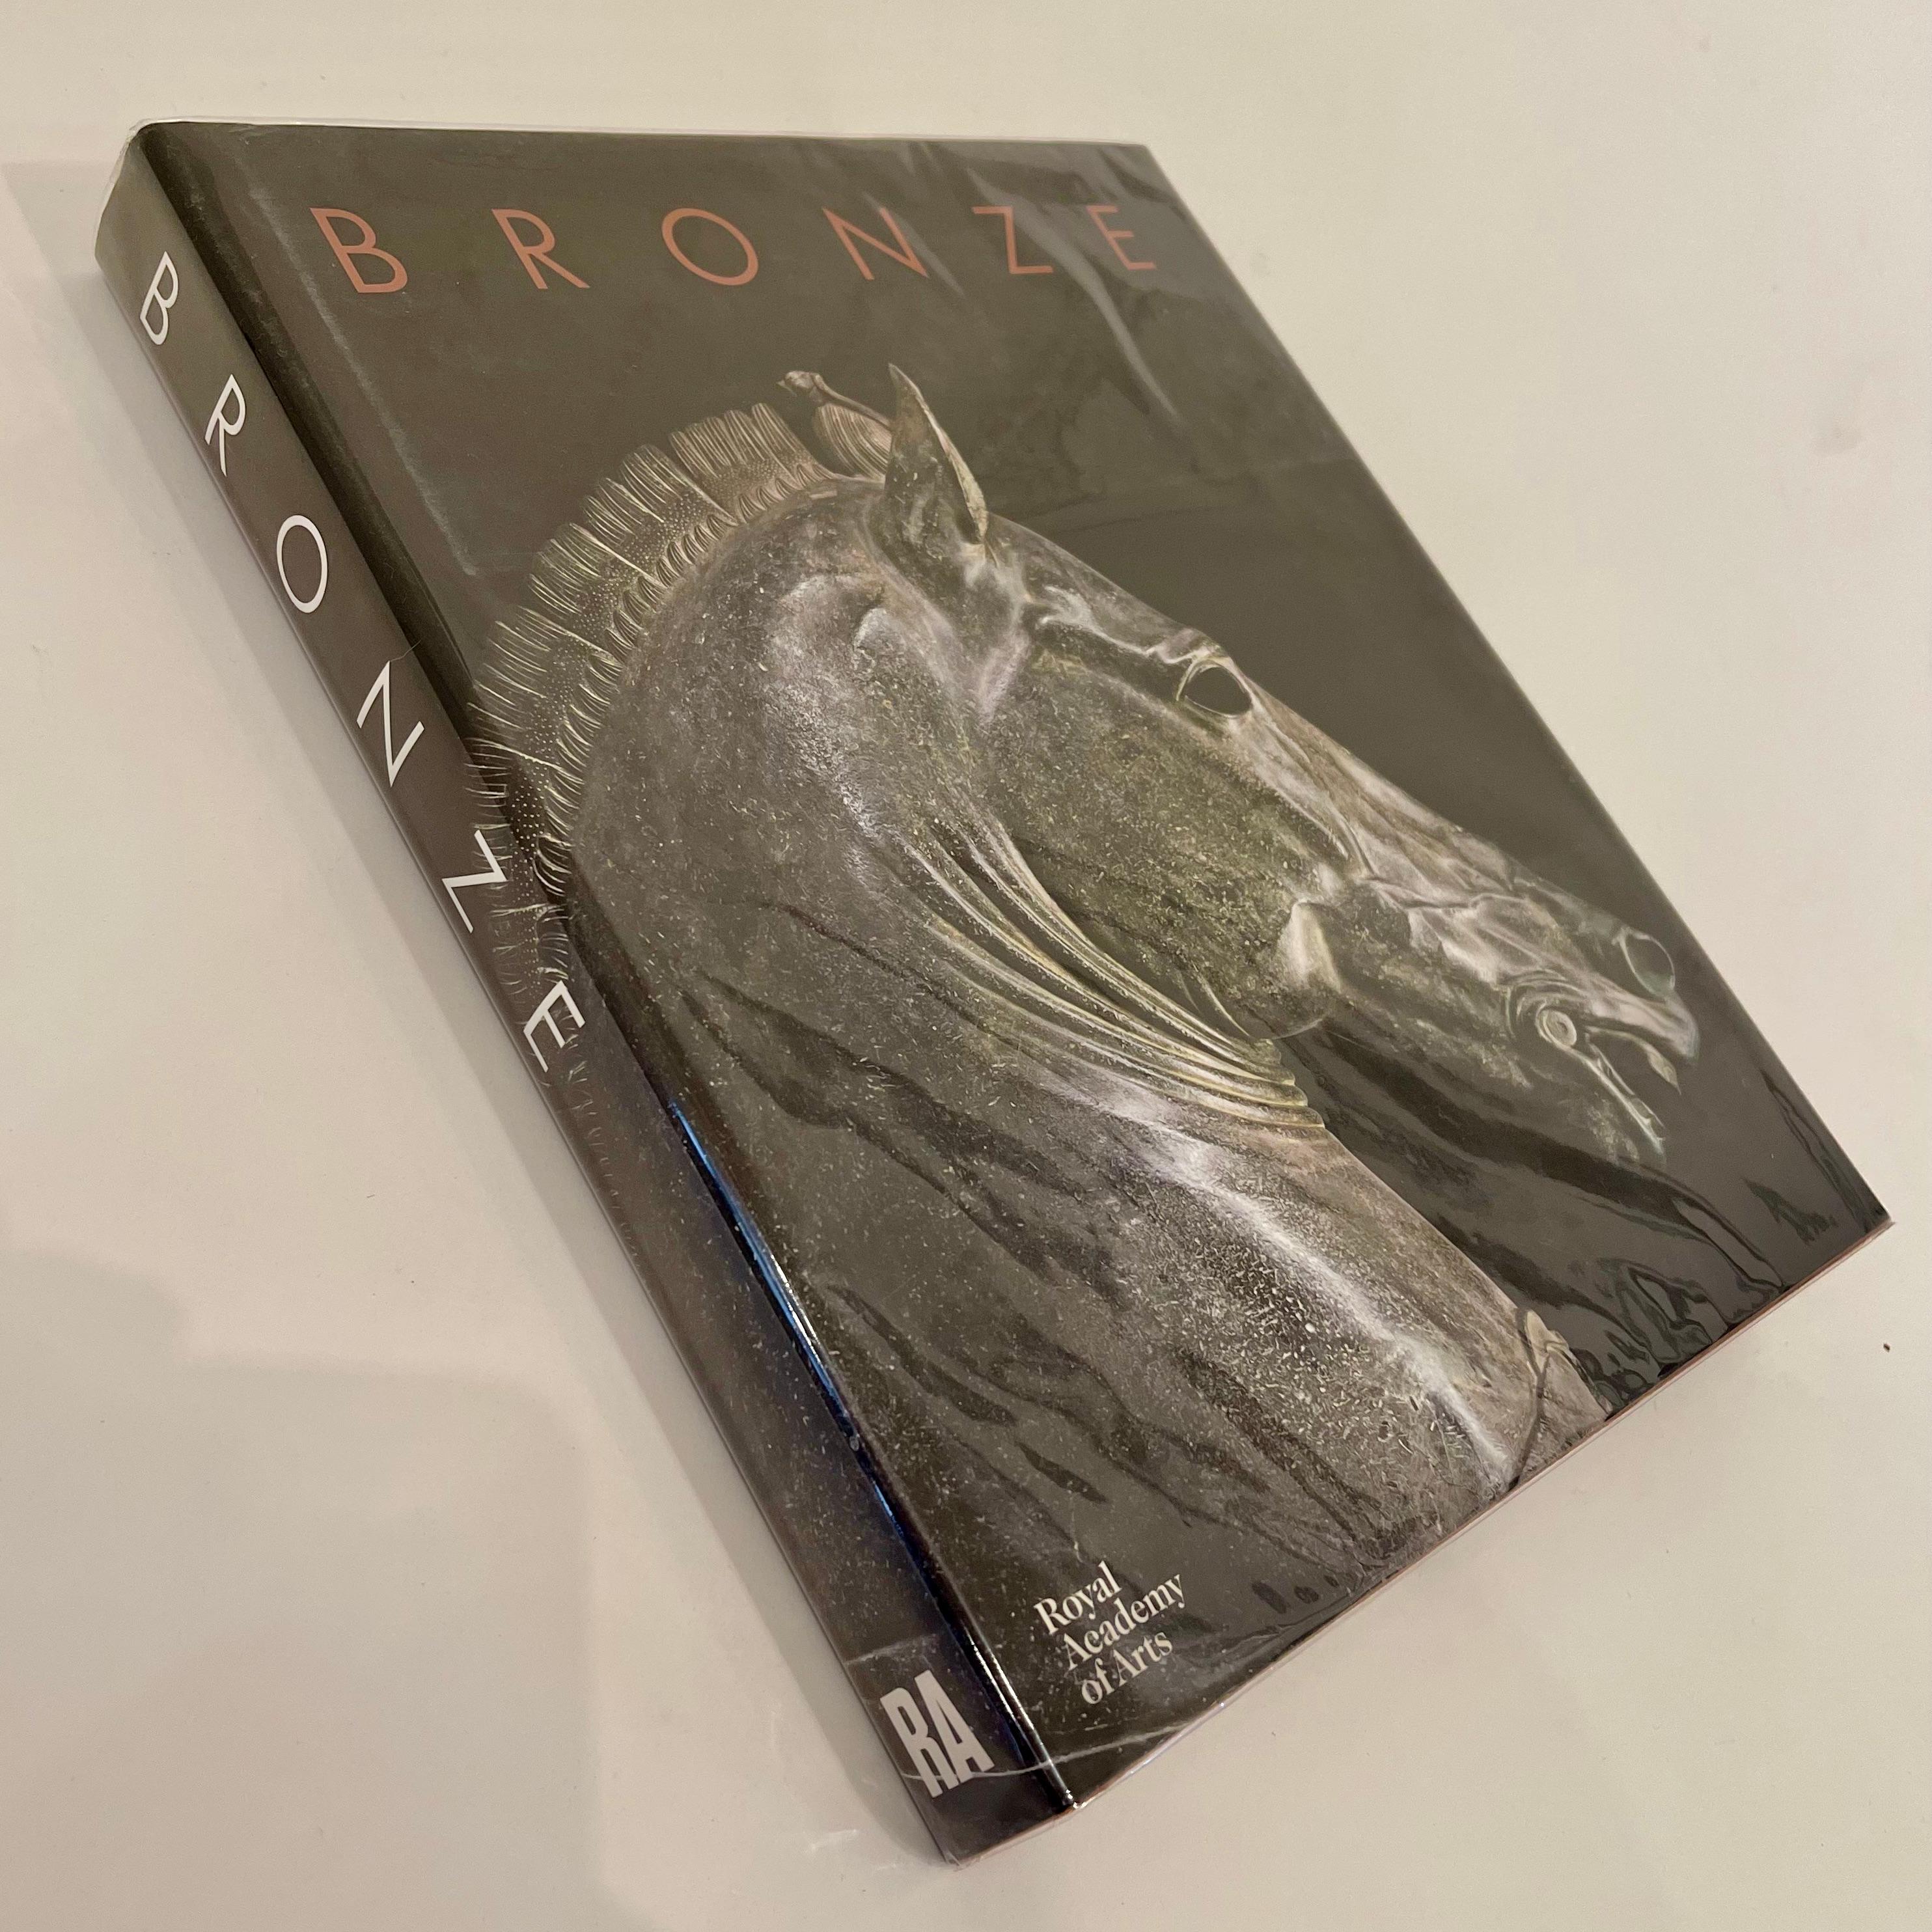 Paper Bronze, David Ekserdjian, Royal Academy of Arts, 1st Edition, 2012